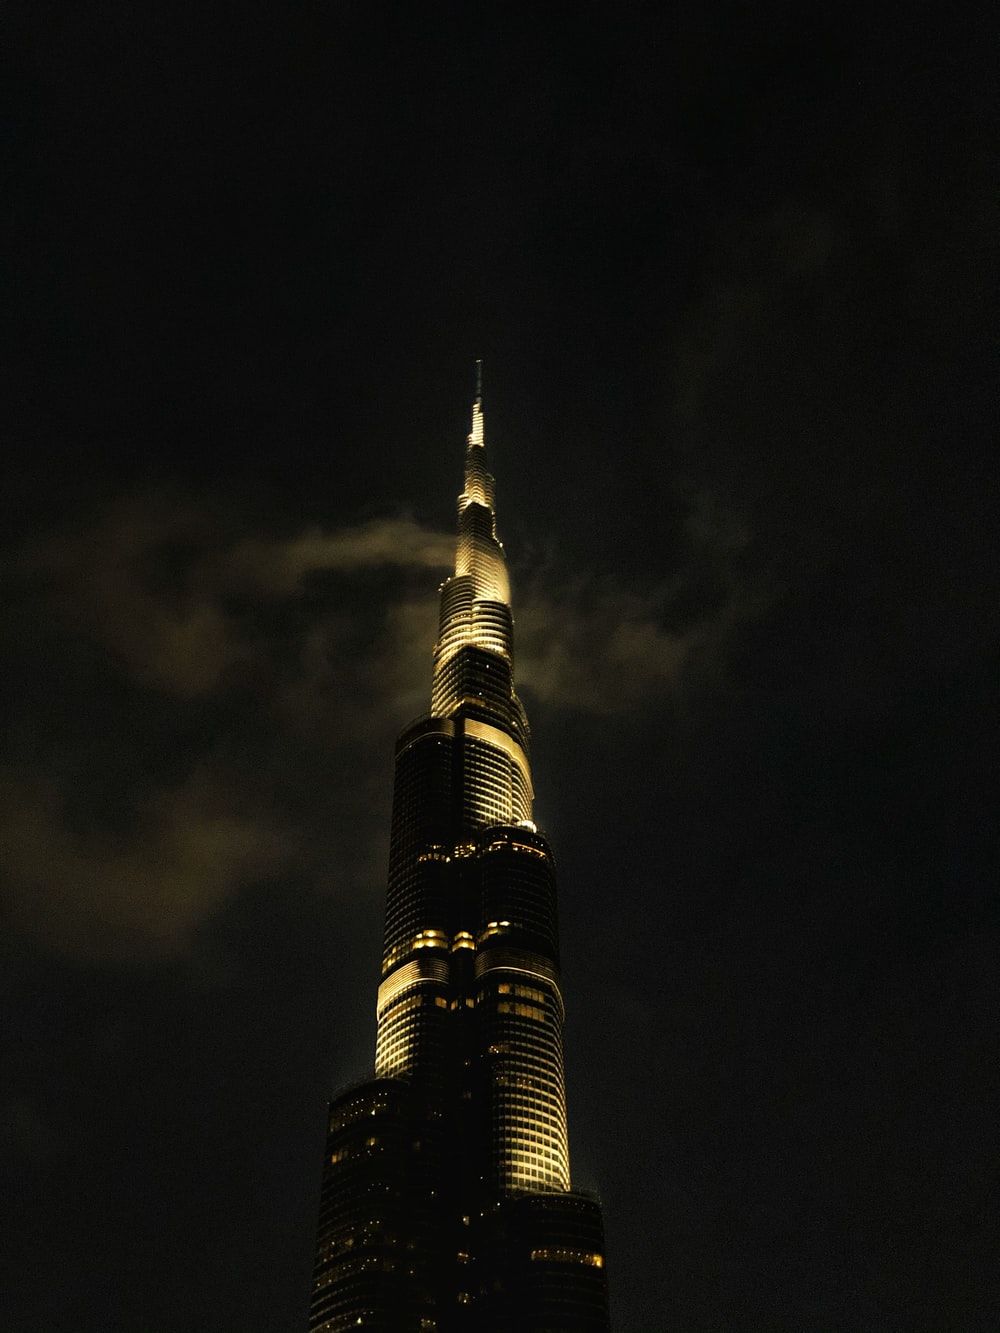 Makkah Royal Clock Tower Picture. Download Free Image